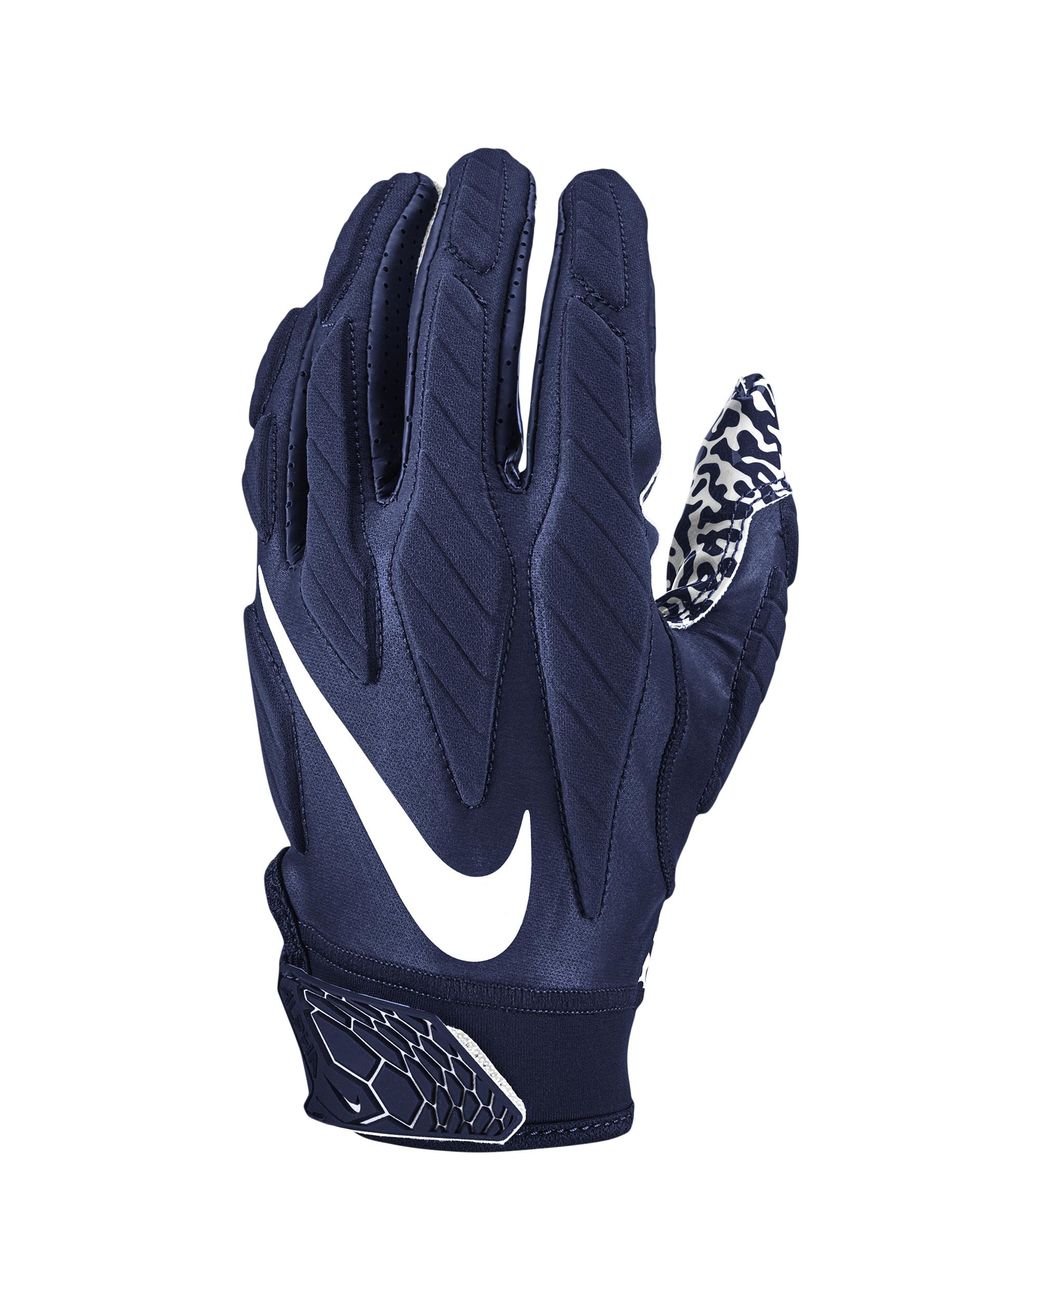 wide receiver gloves sticky